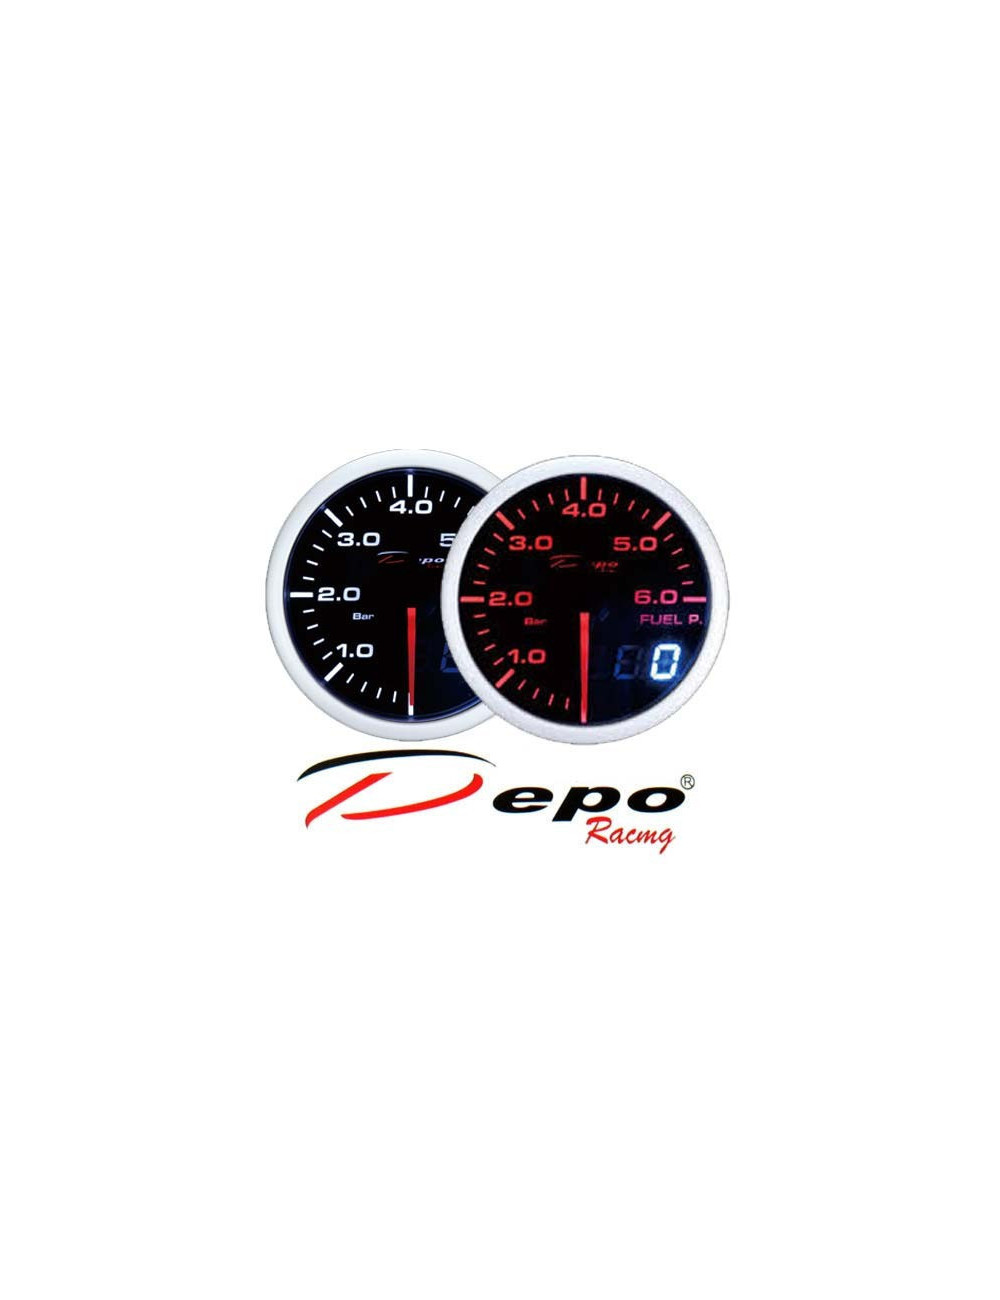 DEPO RACING Manometro Dual View Pressione Benzina 0-6 bar DEPO Racing